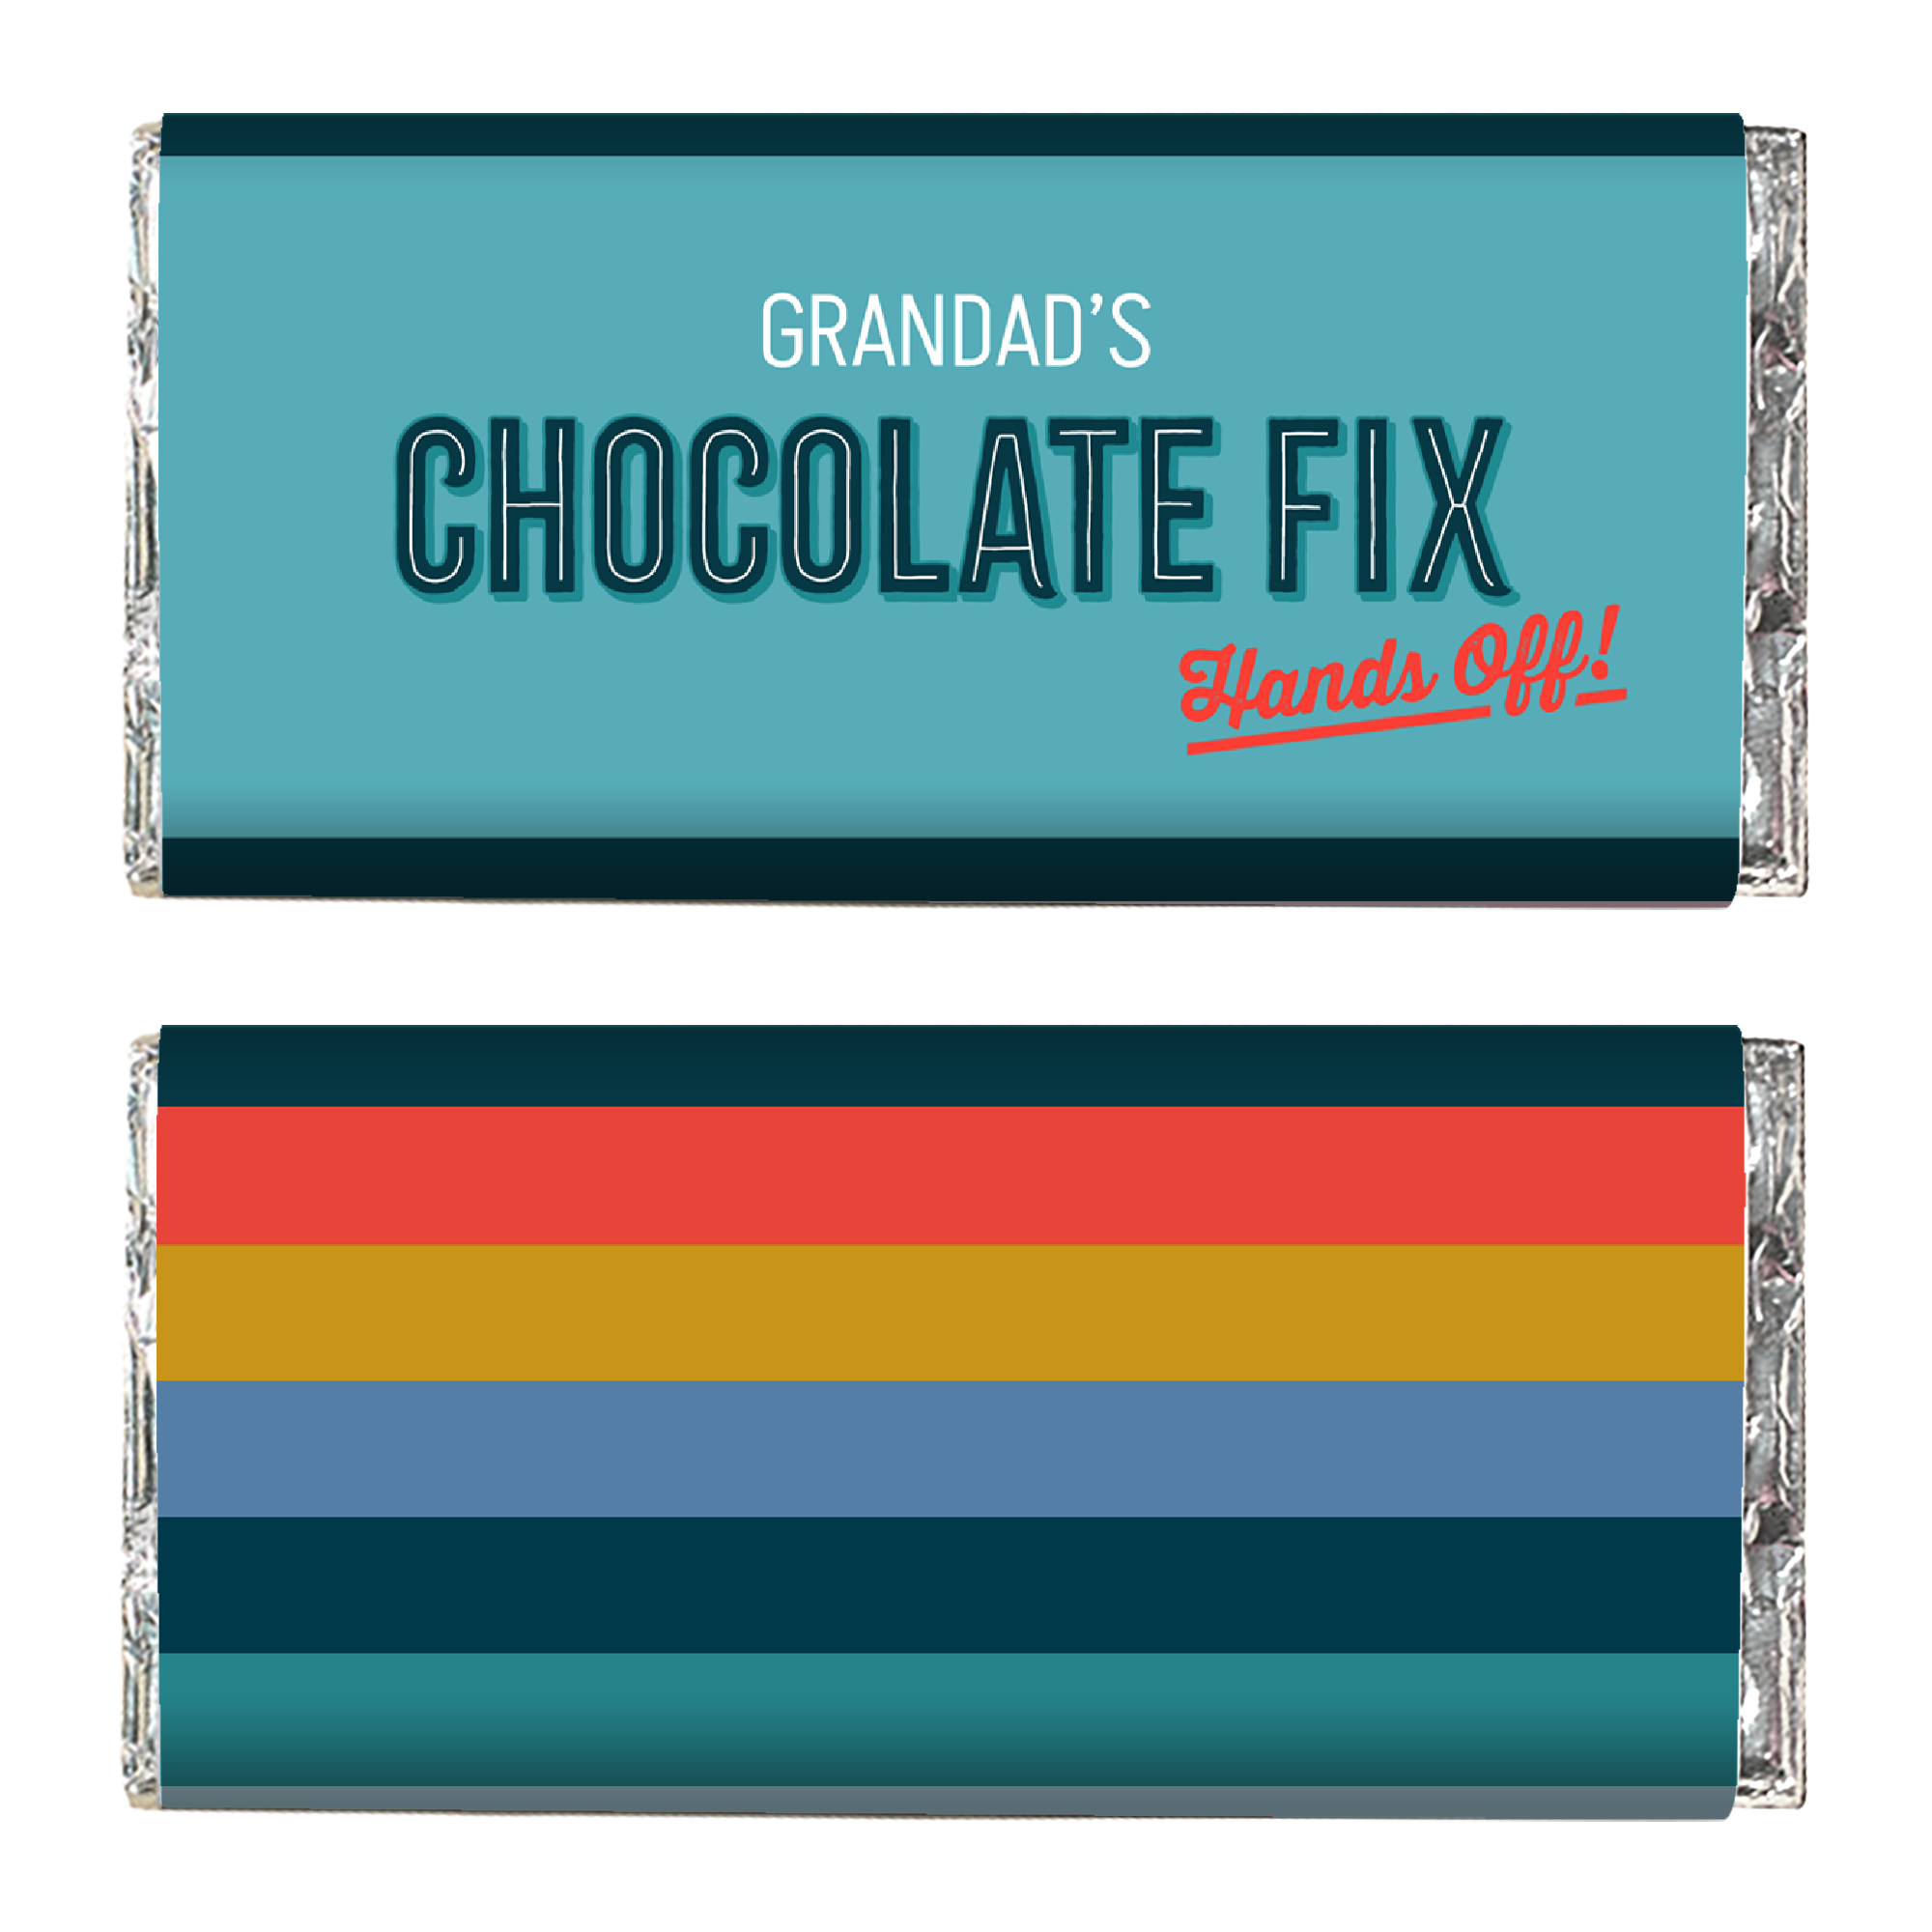 Personalised Chocolate Bar - Chocolate Fix